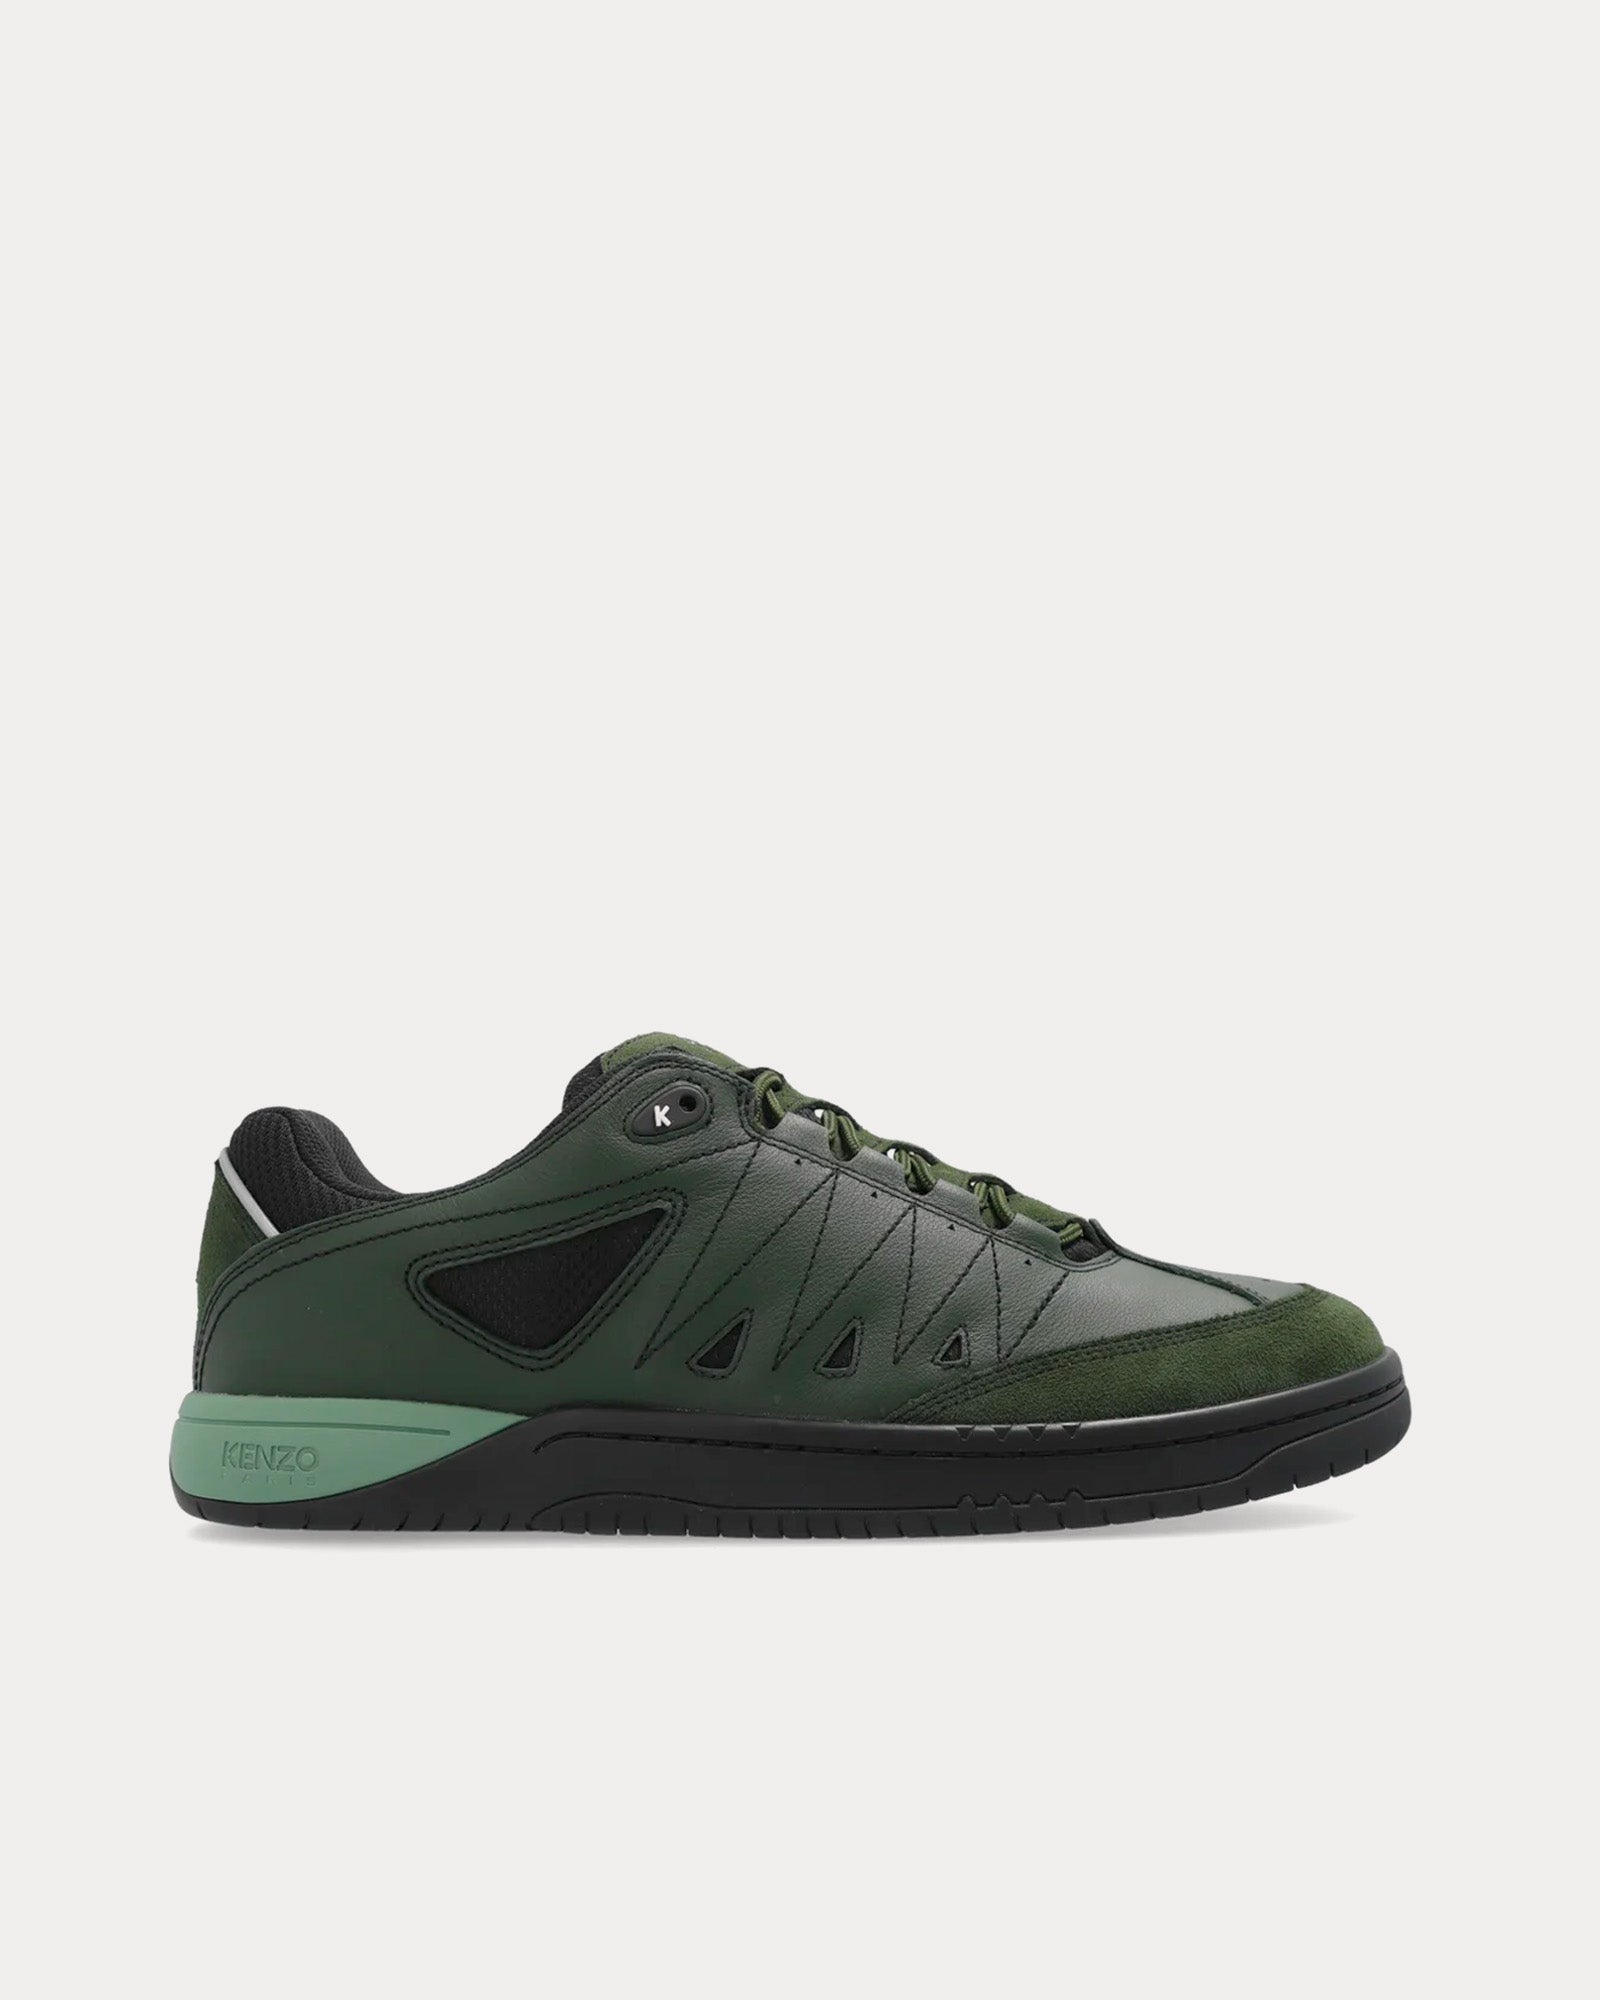 Kenzo - Kenzo-PXT Green Low Top Sneakers